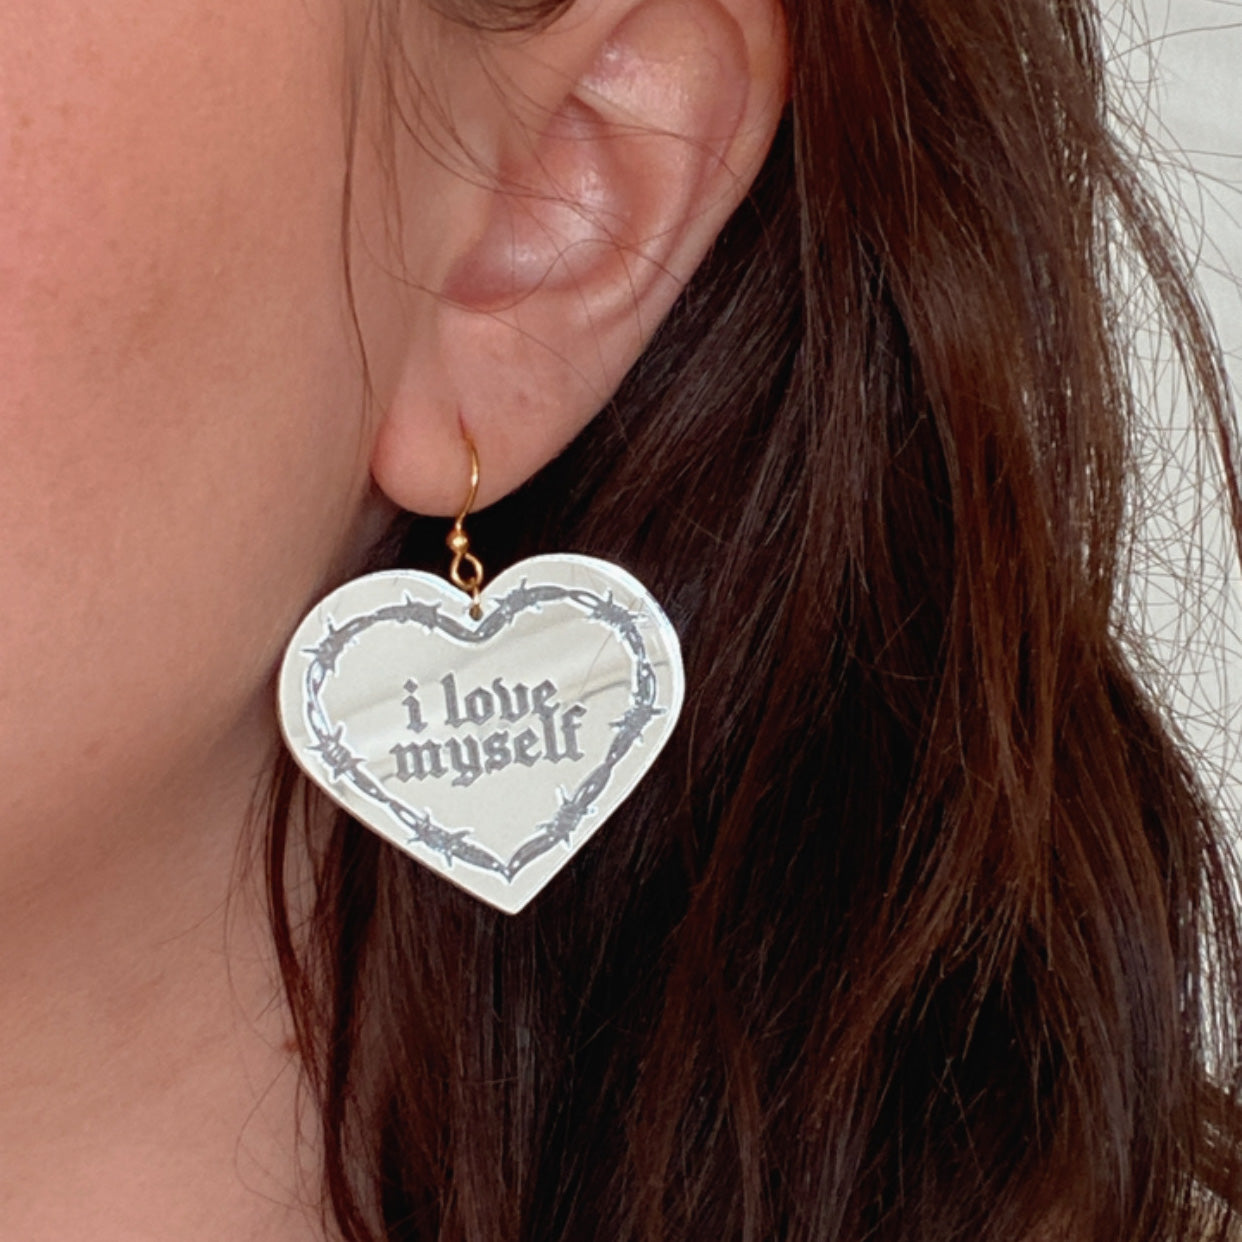 self love club earrings